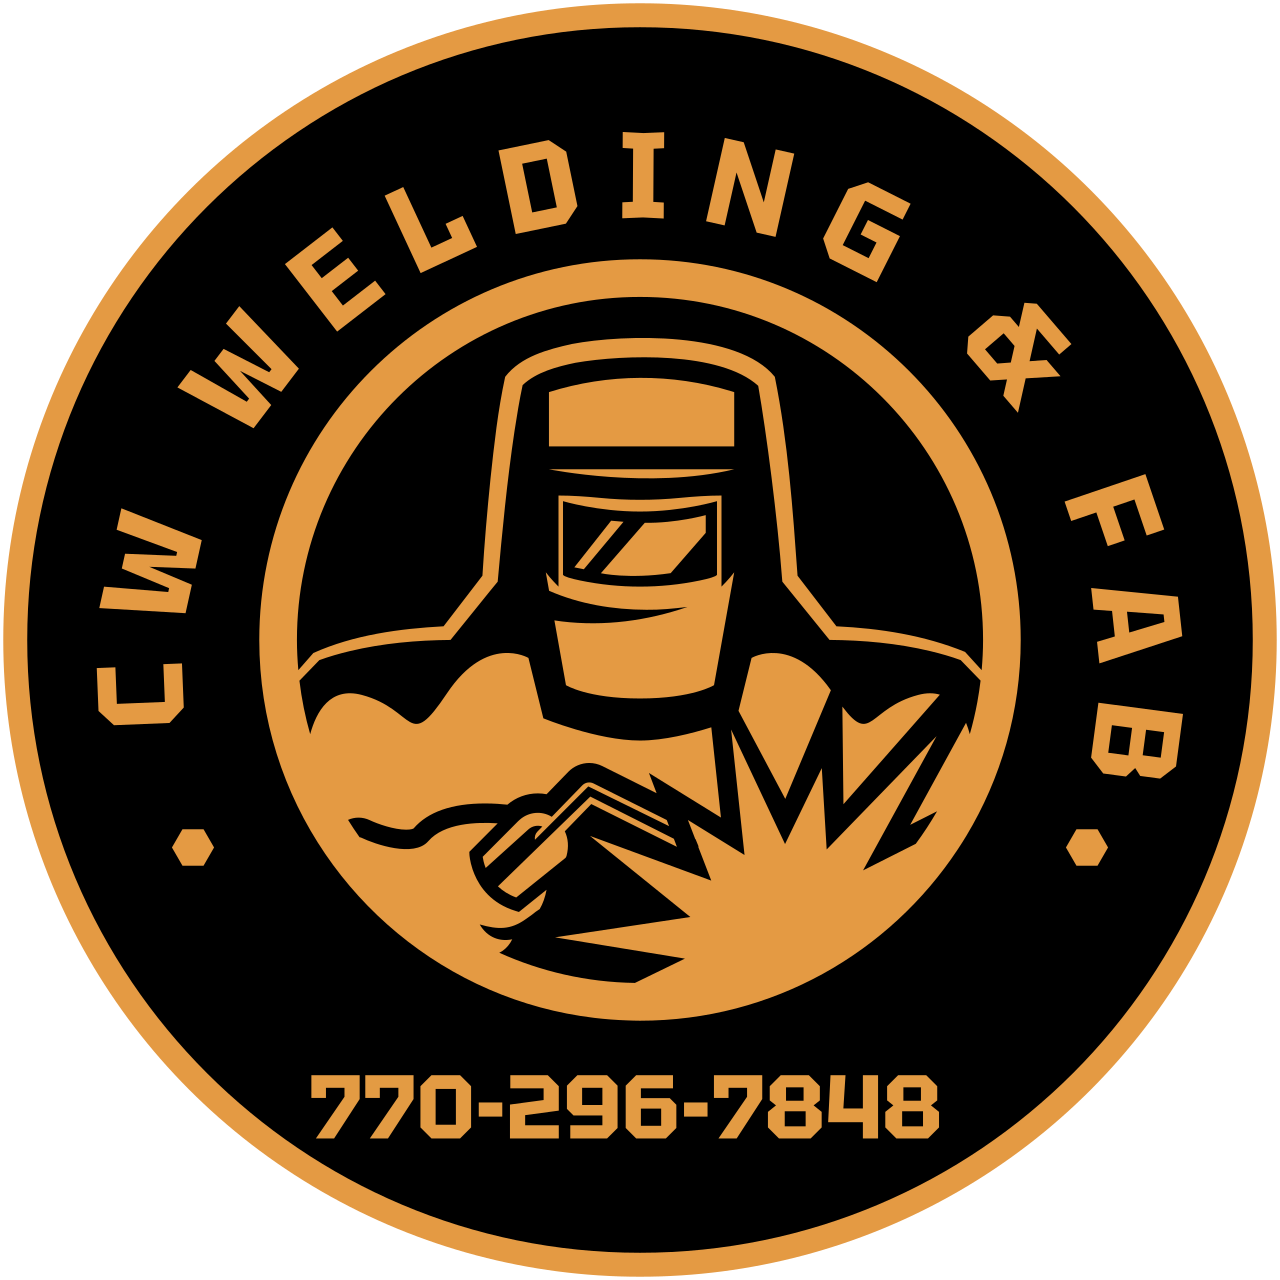 CW WELDING & FAB's logo